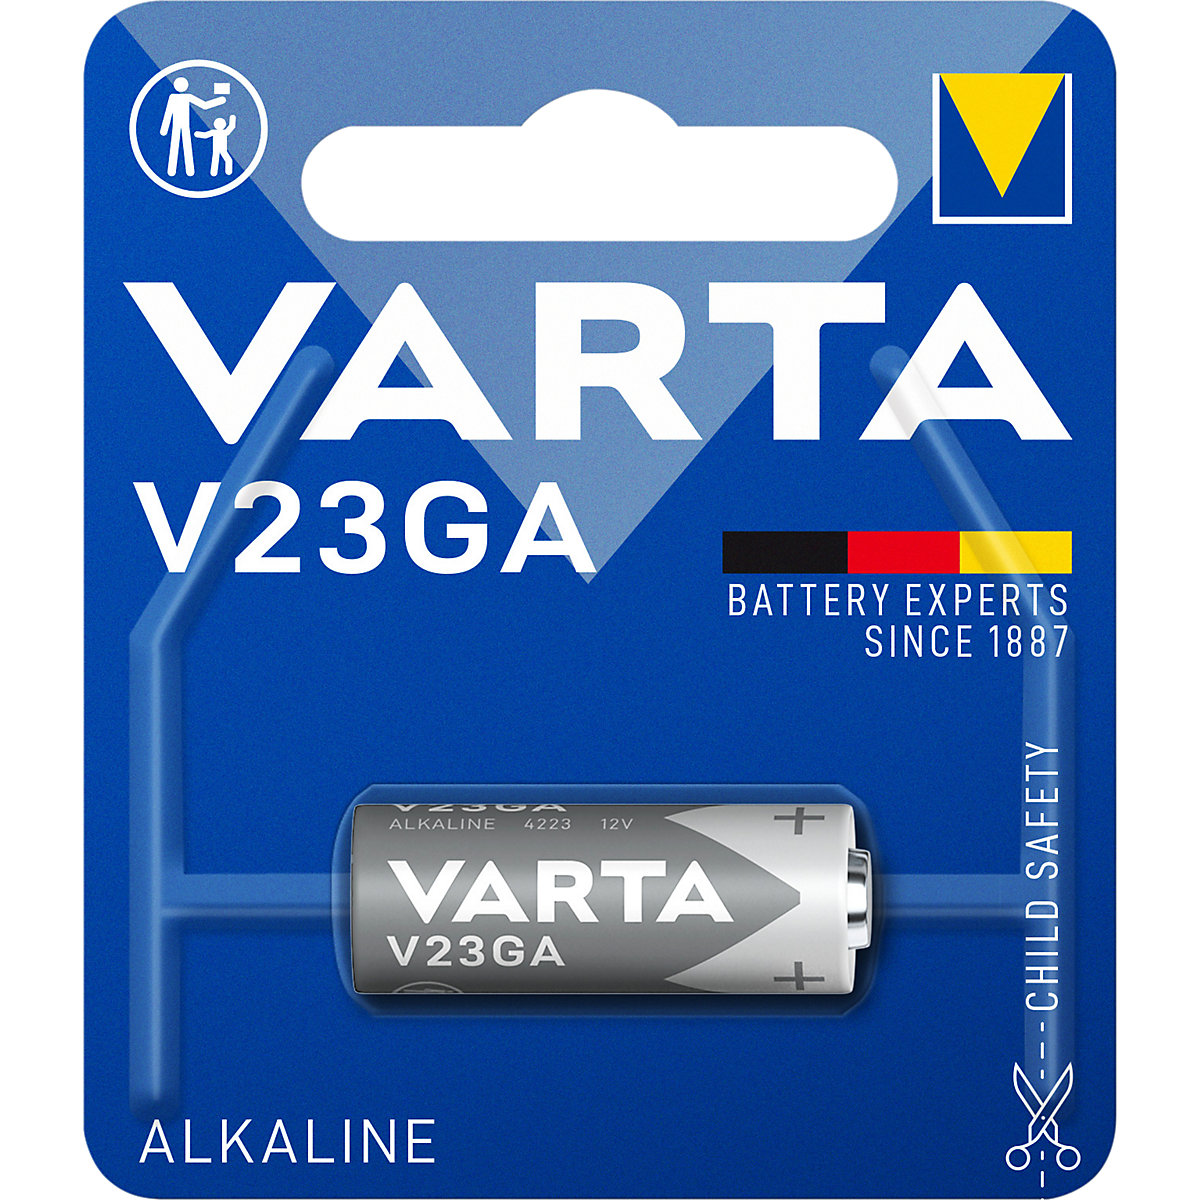 Batteria speciale ALKALINE - VARTA